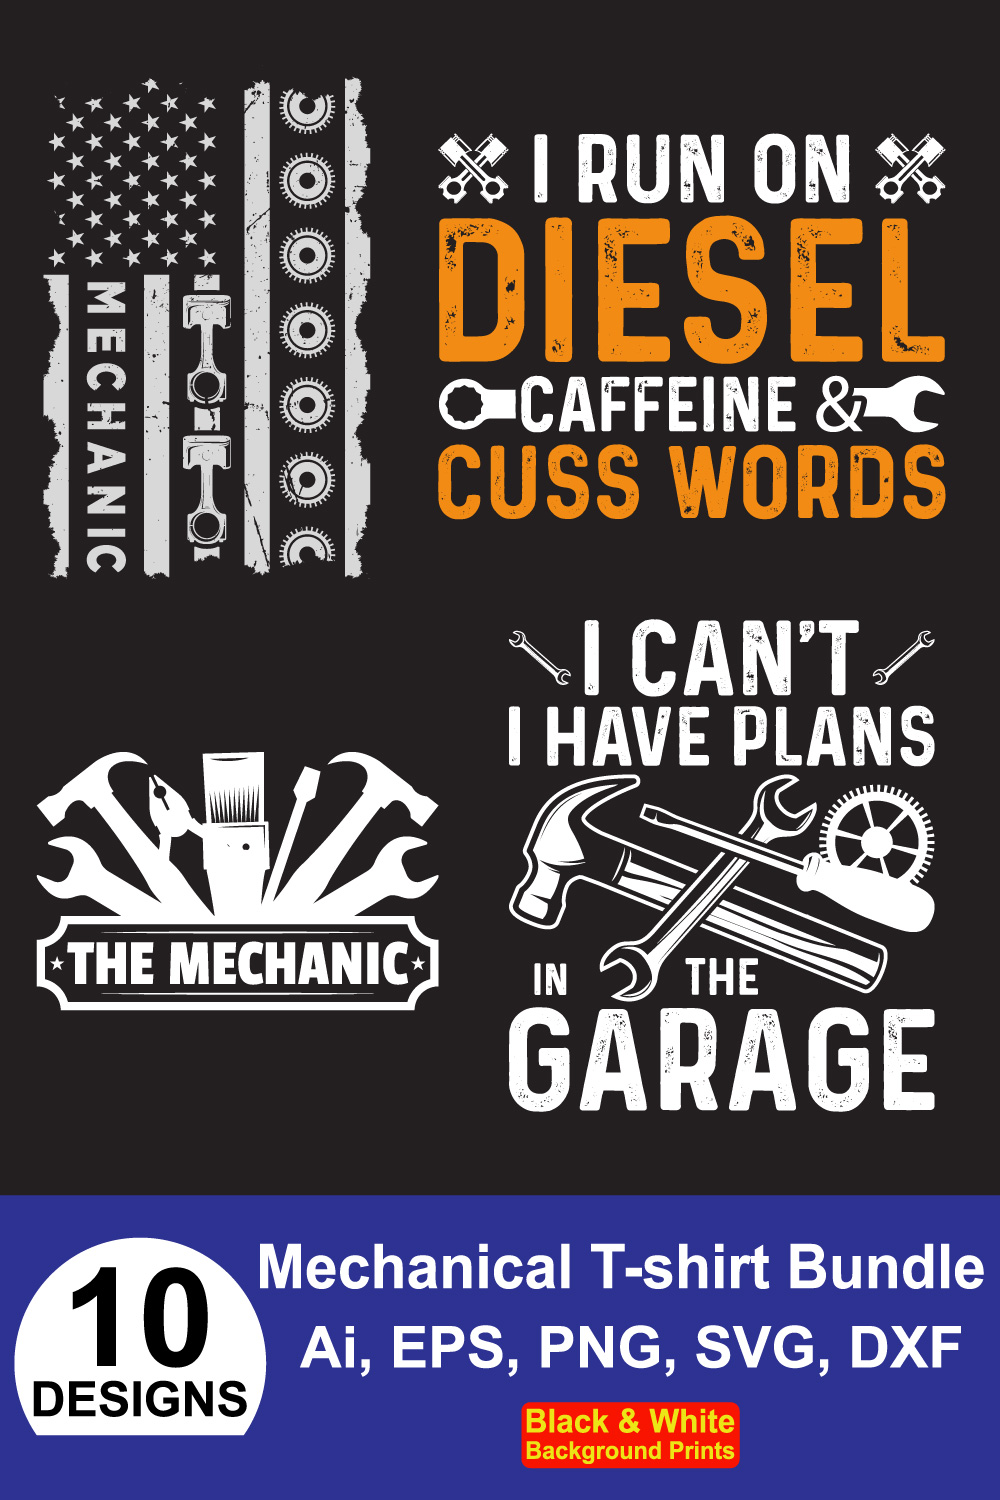 Mechanical Engineering T-shirt Design Pinterest collage image.